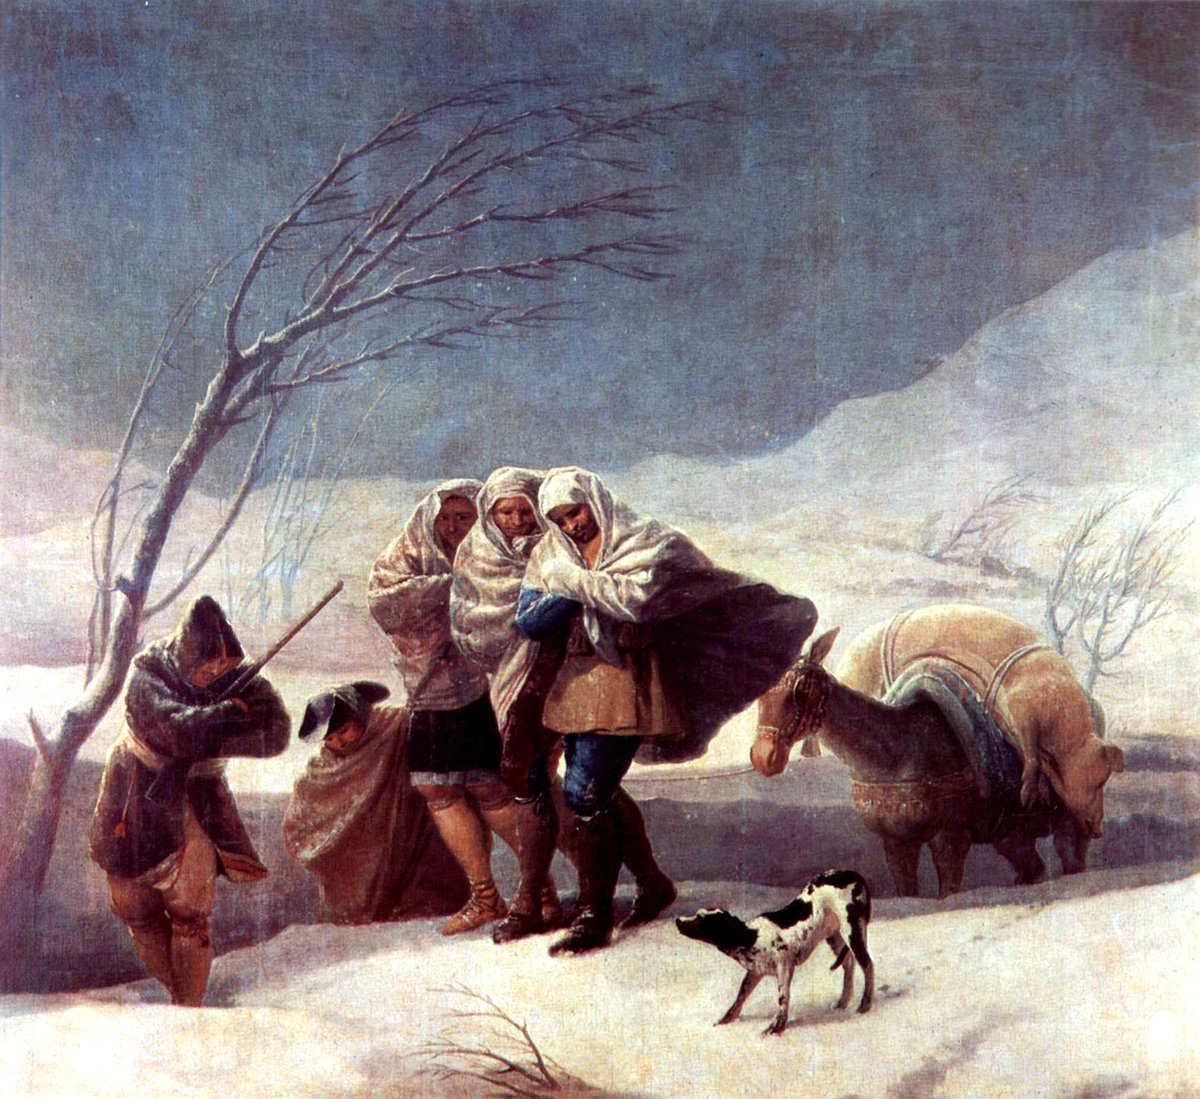 The Snowstorm (Winter), 1787 #franciscogoya #goya https://t.co/pjxBQ6h24R